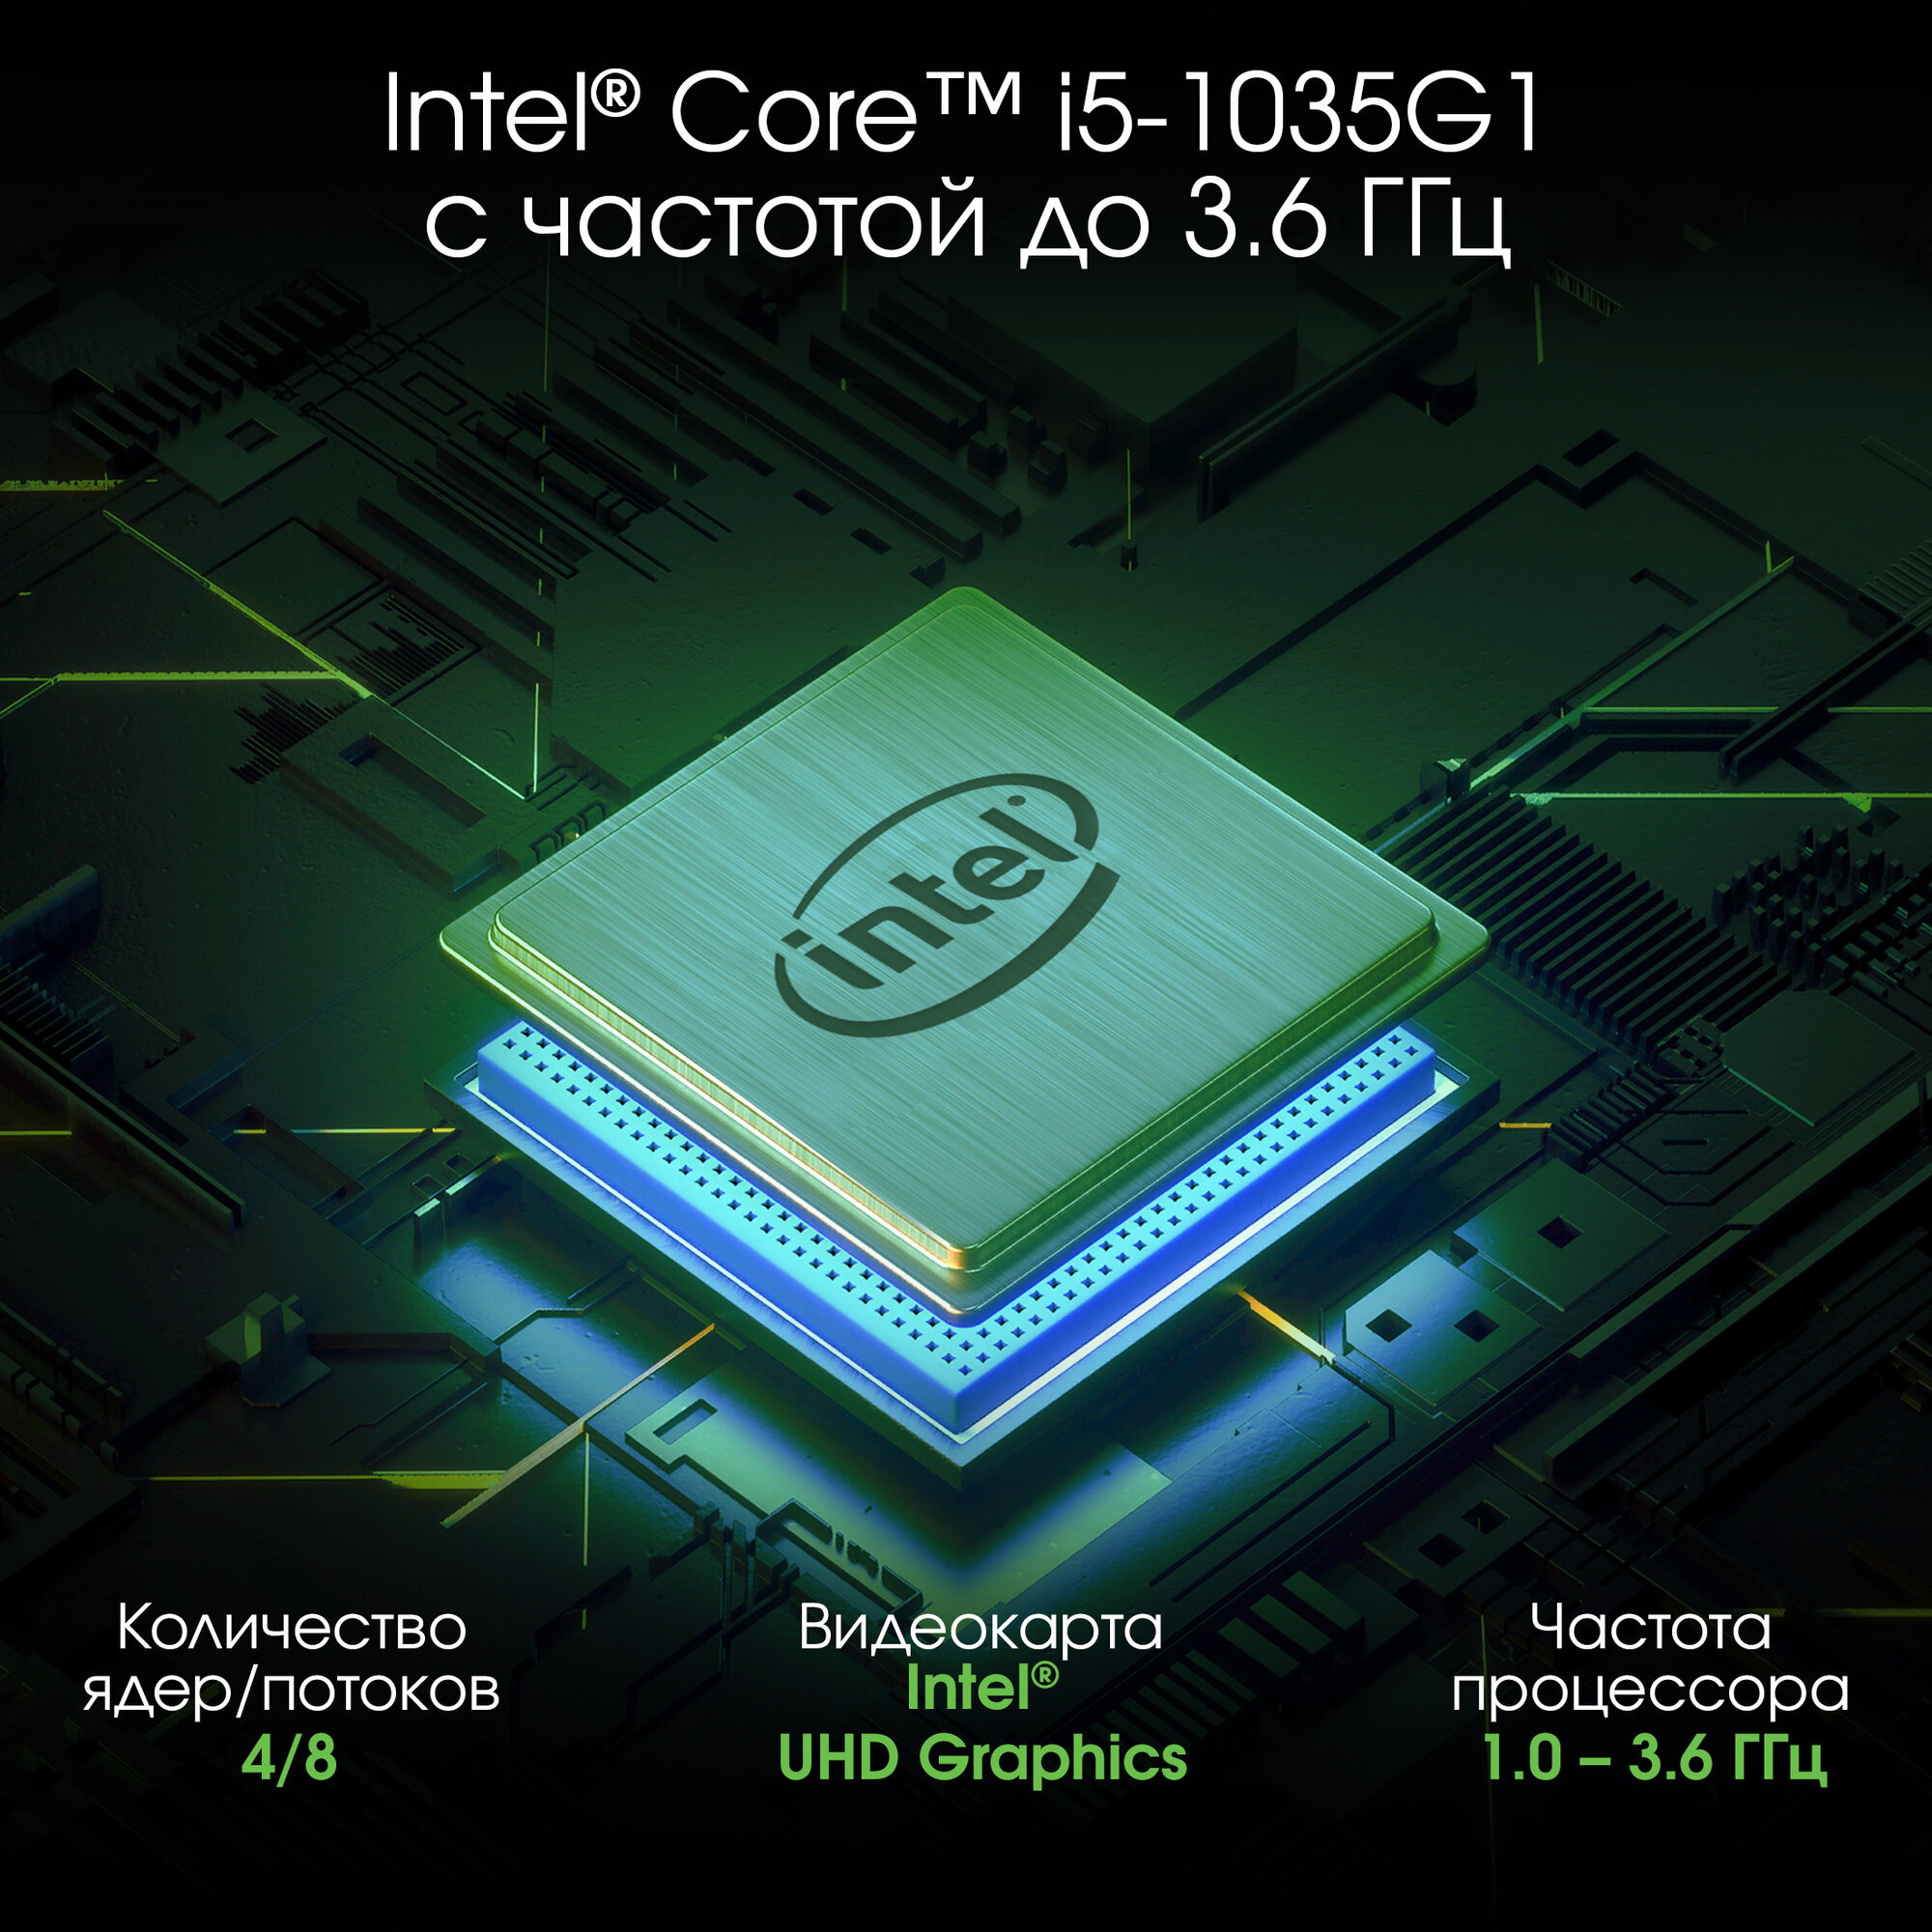 Ноутбук Digma Pro Fortis, 14.1", IPS, Intel Core i5 1035G1, LPDDR4x 8ГБ, SSD 512ГБ, Intel UHD Graphics, серый (dn14p5-8dxw01)